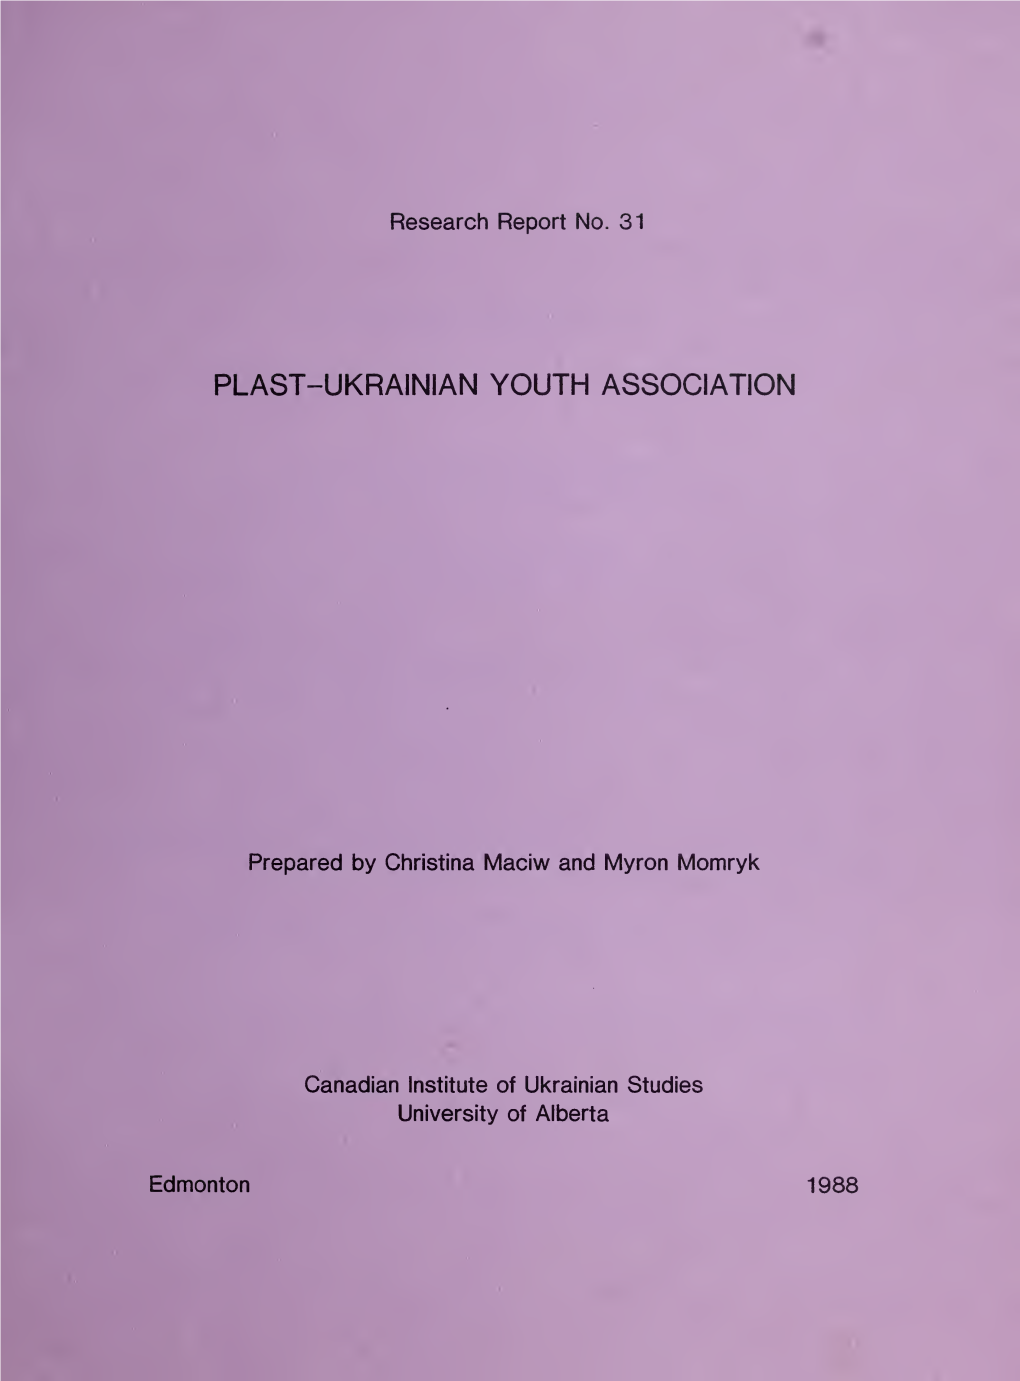 Plast-Ukrainian Youth Association